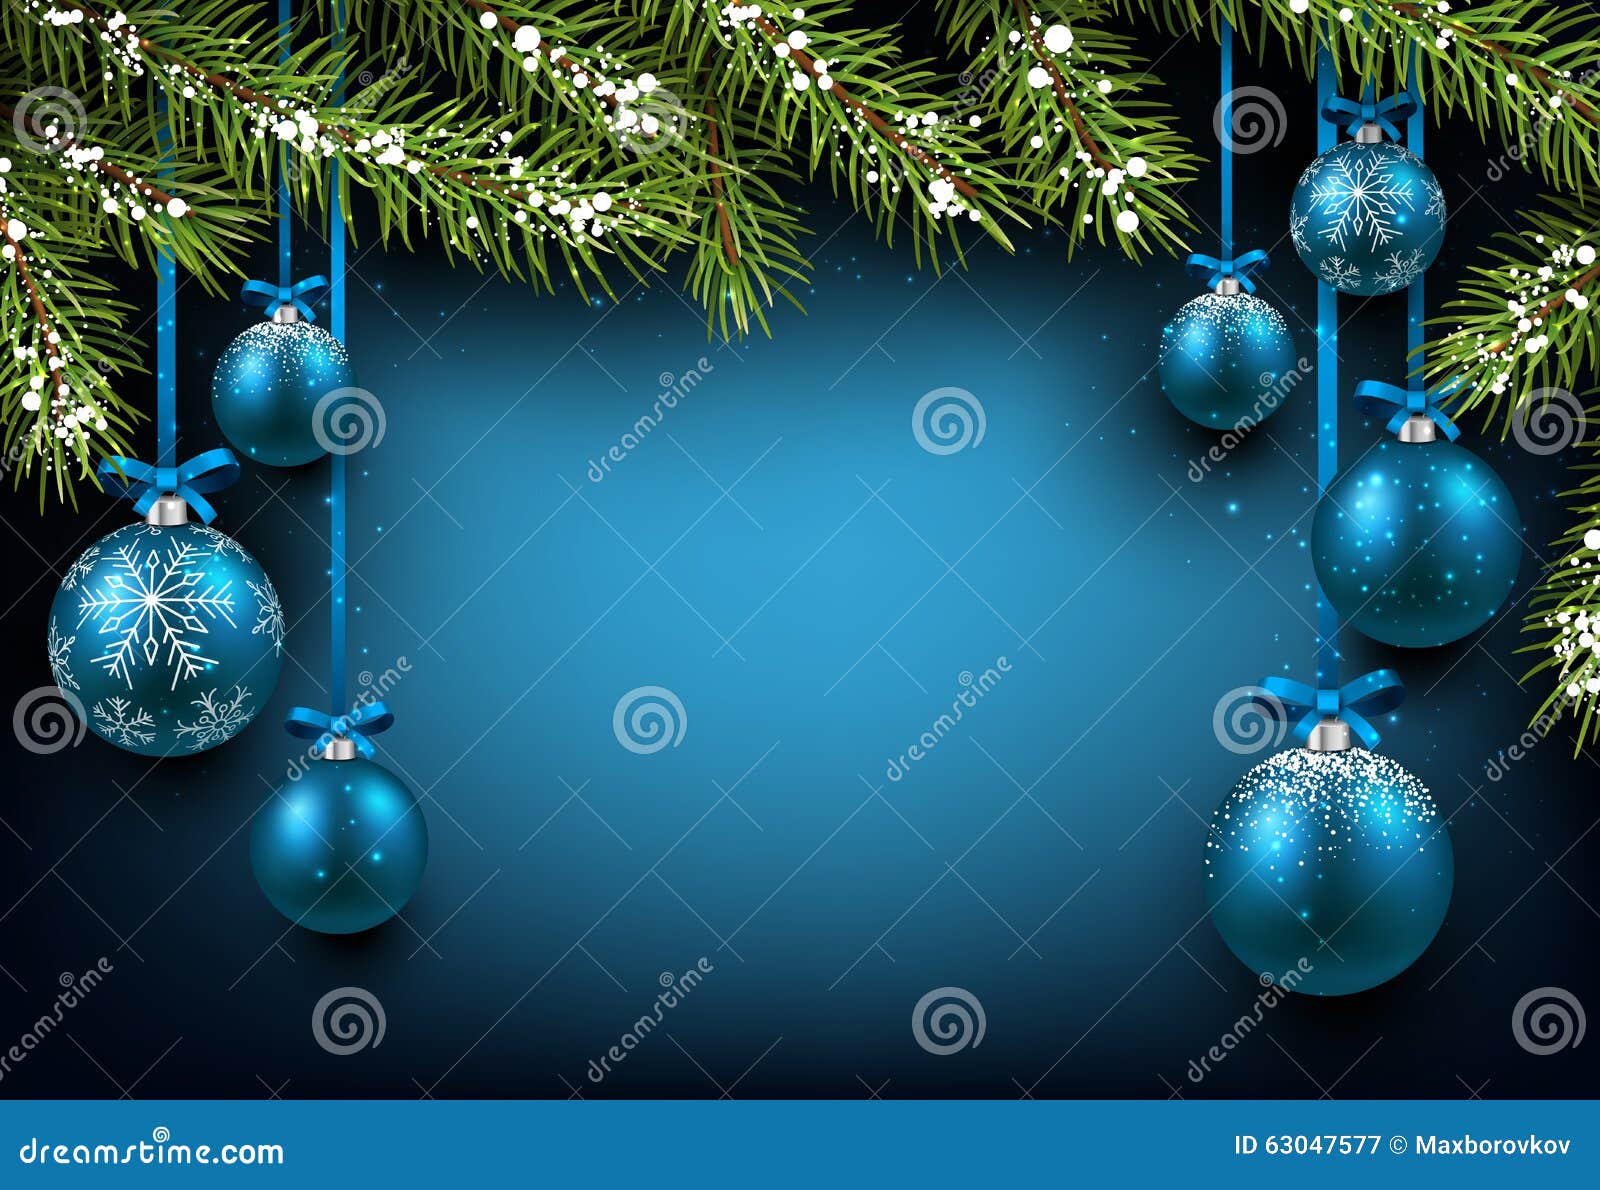 Christmas blue background stock vector. Illustration of light - 63047577